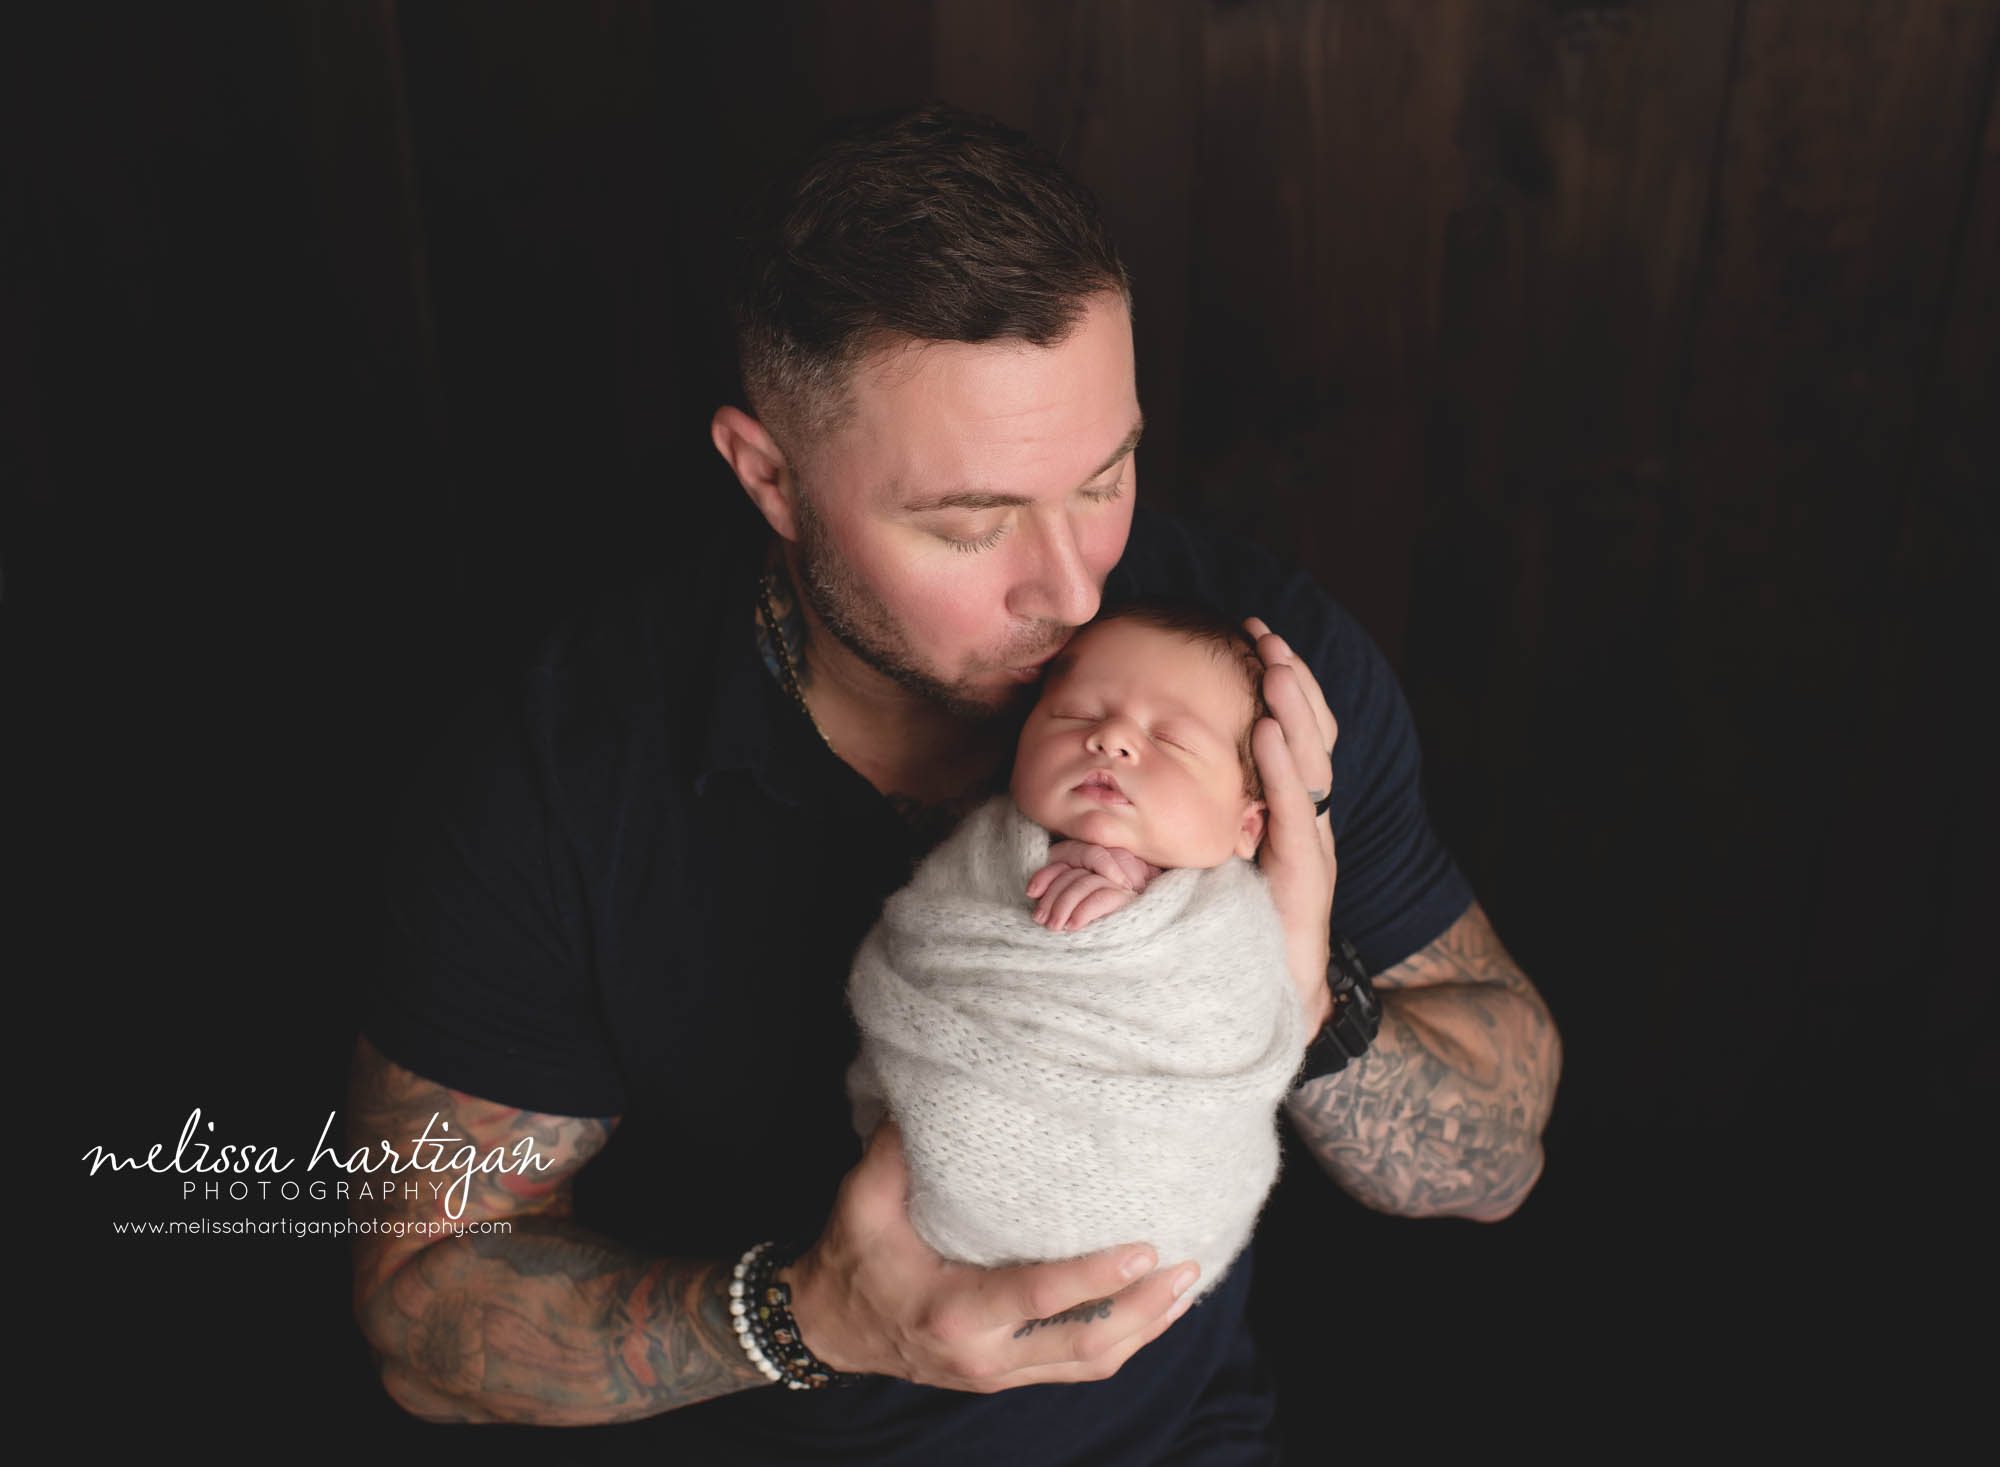 Dad holding newborn son in studio newborn photography session